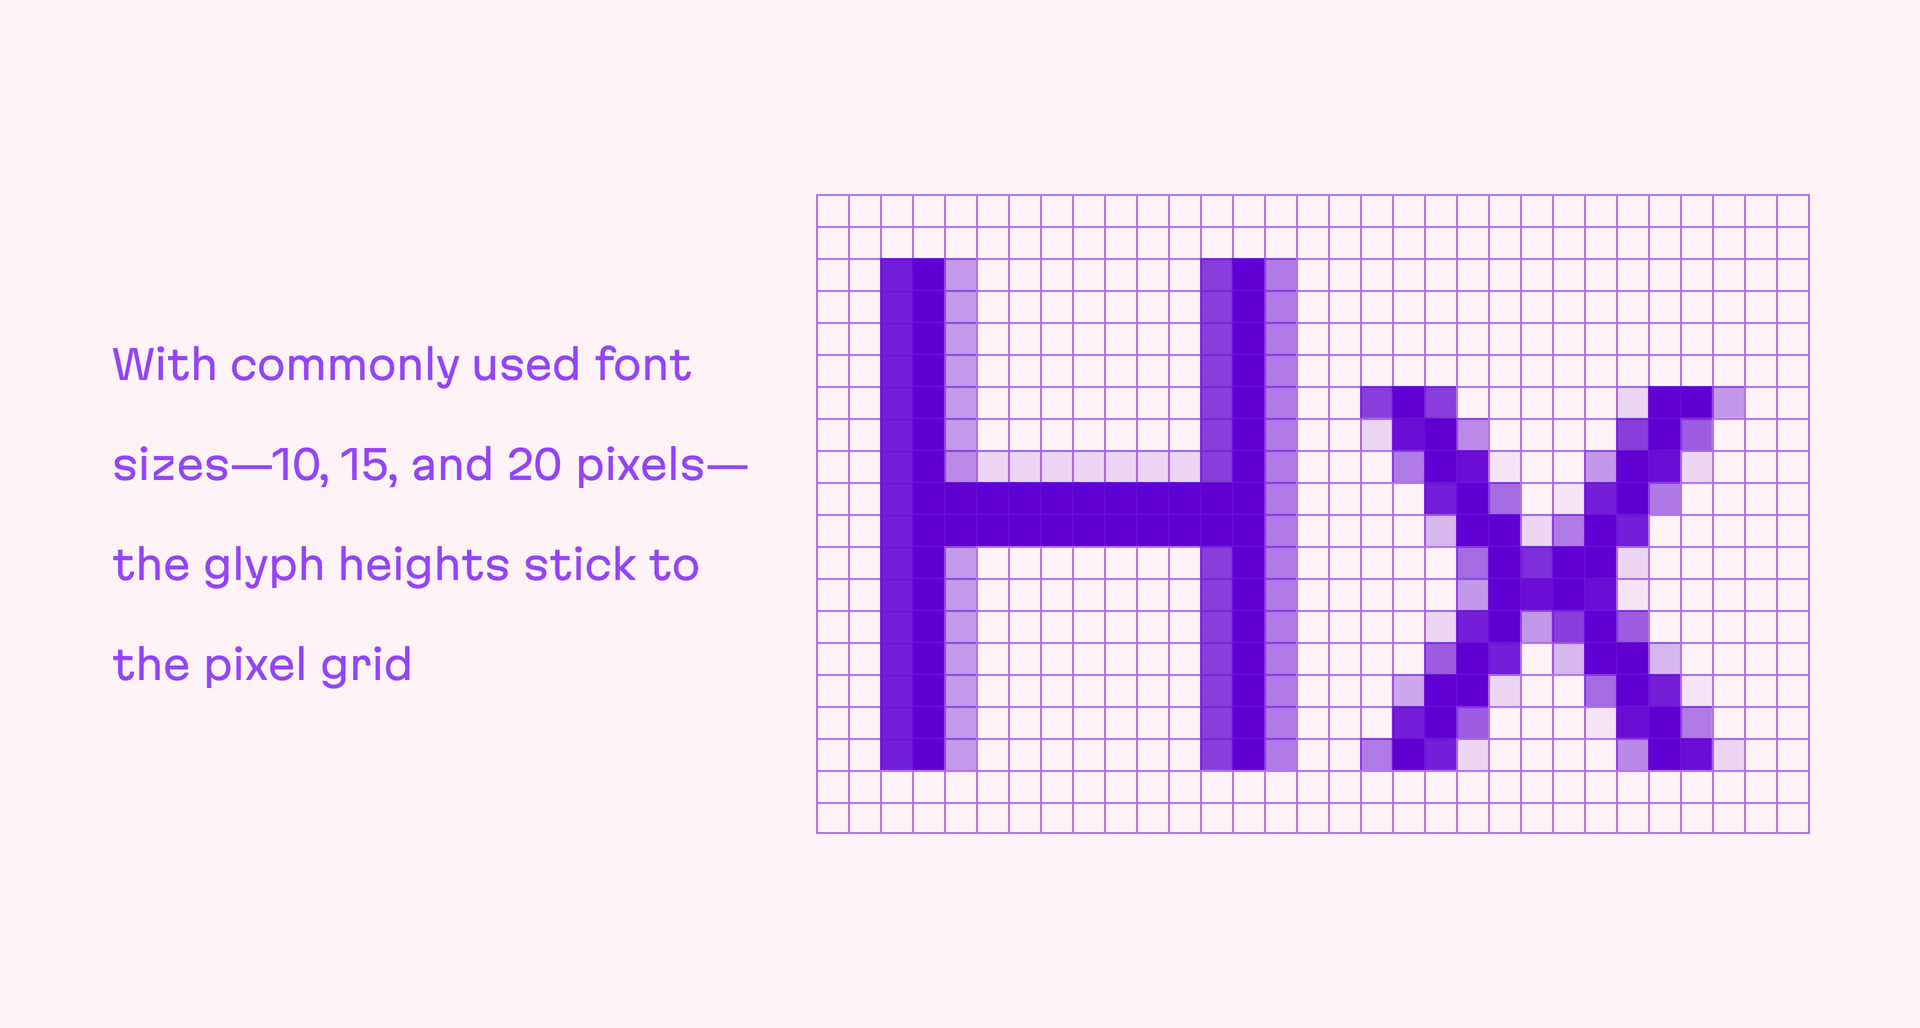 Illustration of popular font sizes—10, 15, and 20 pixels